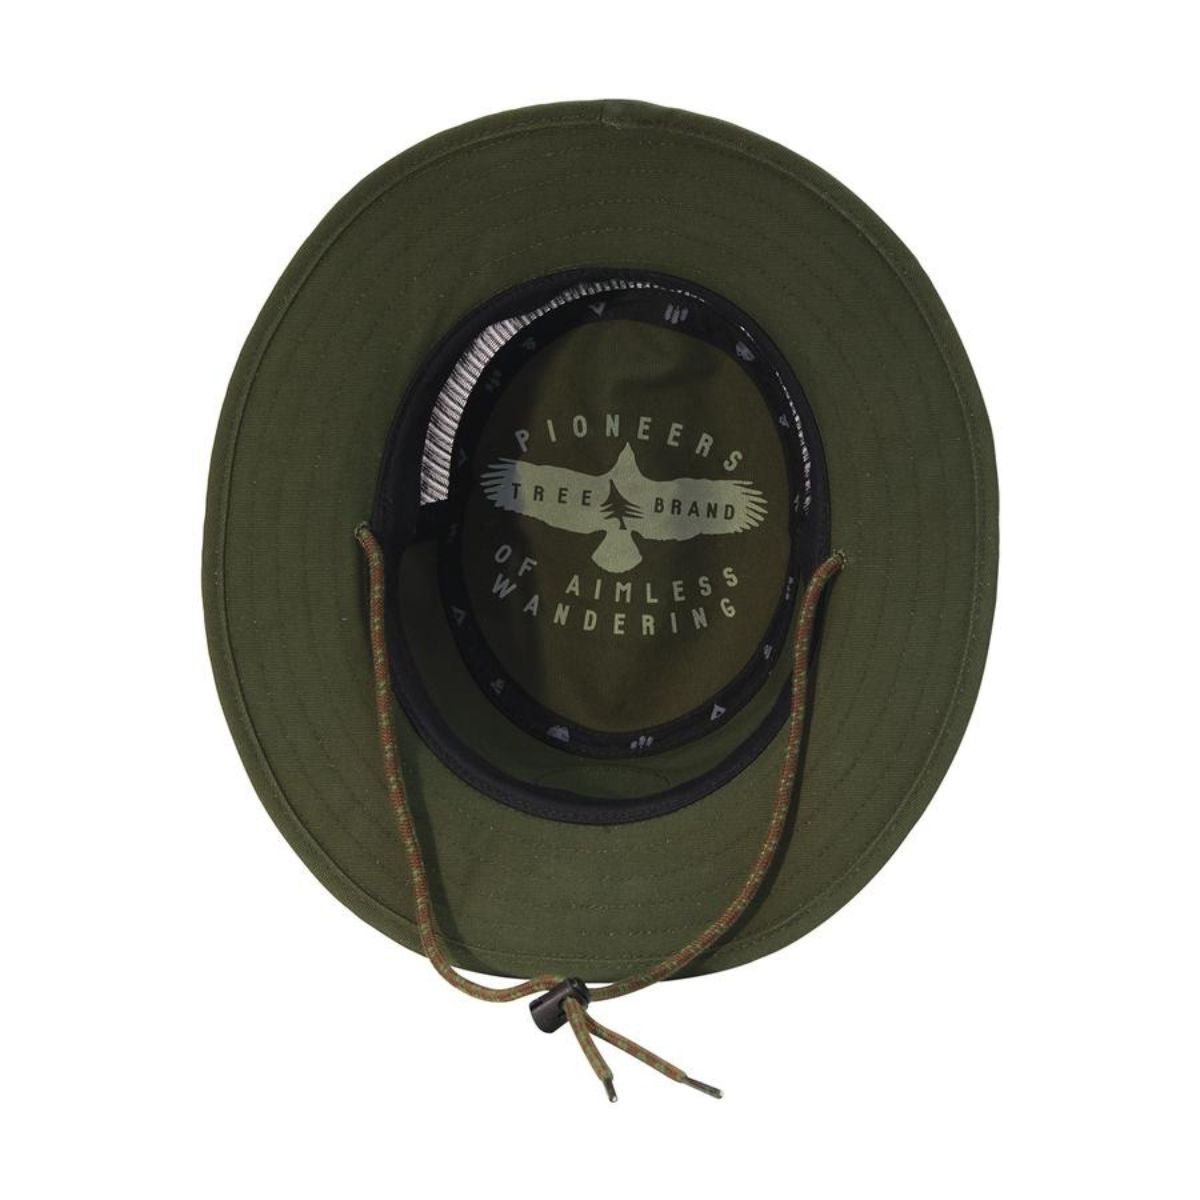 Hippy Tree Ventura Hat in Army - BoardCo